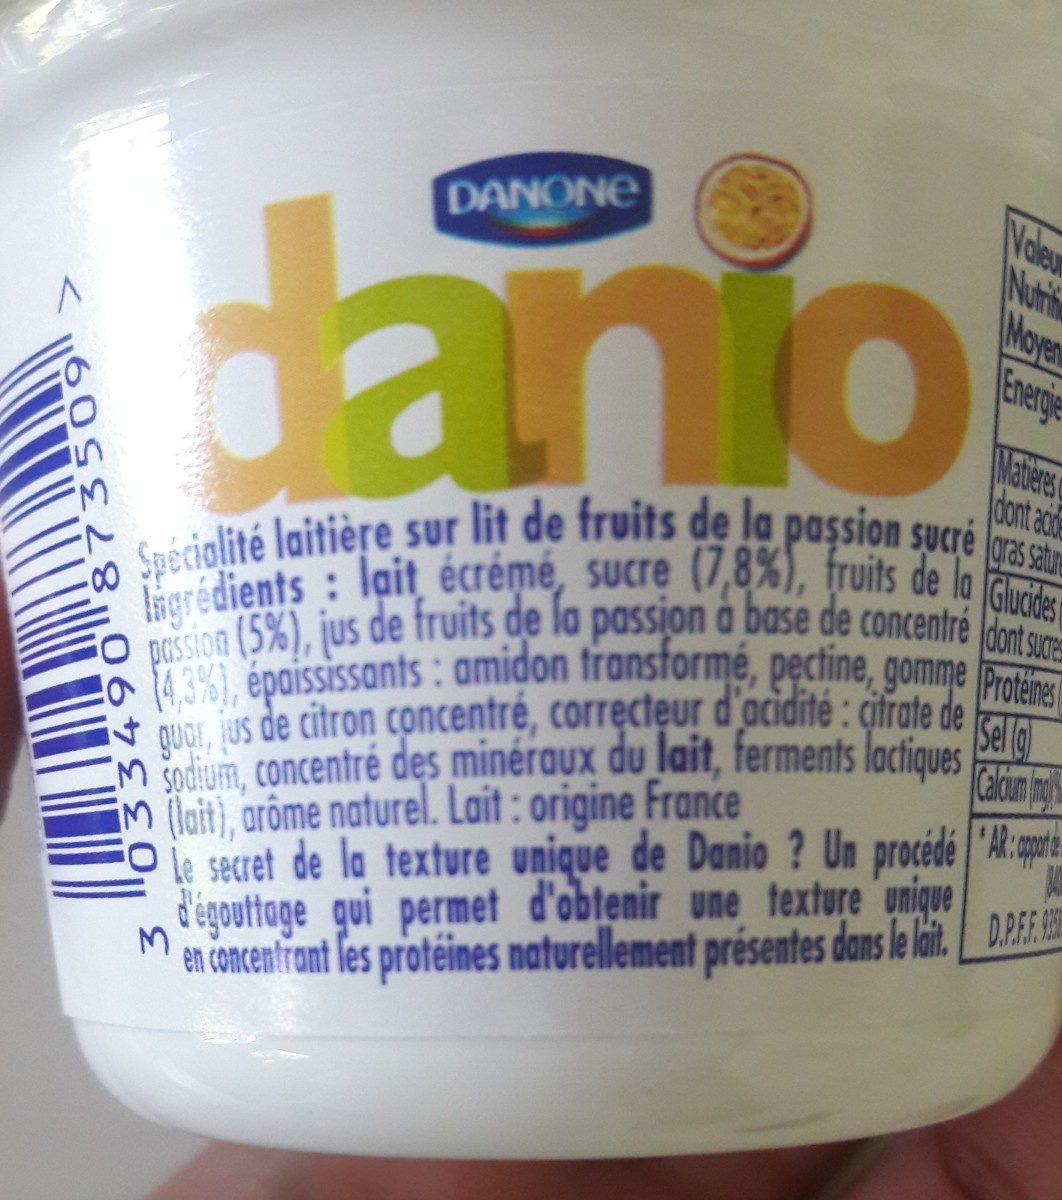 Danio 0% mg passion 150 g x 1 - Ingredients - fr